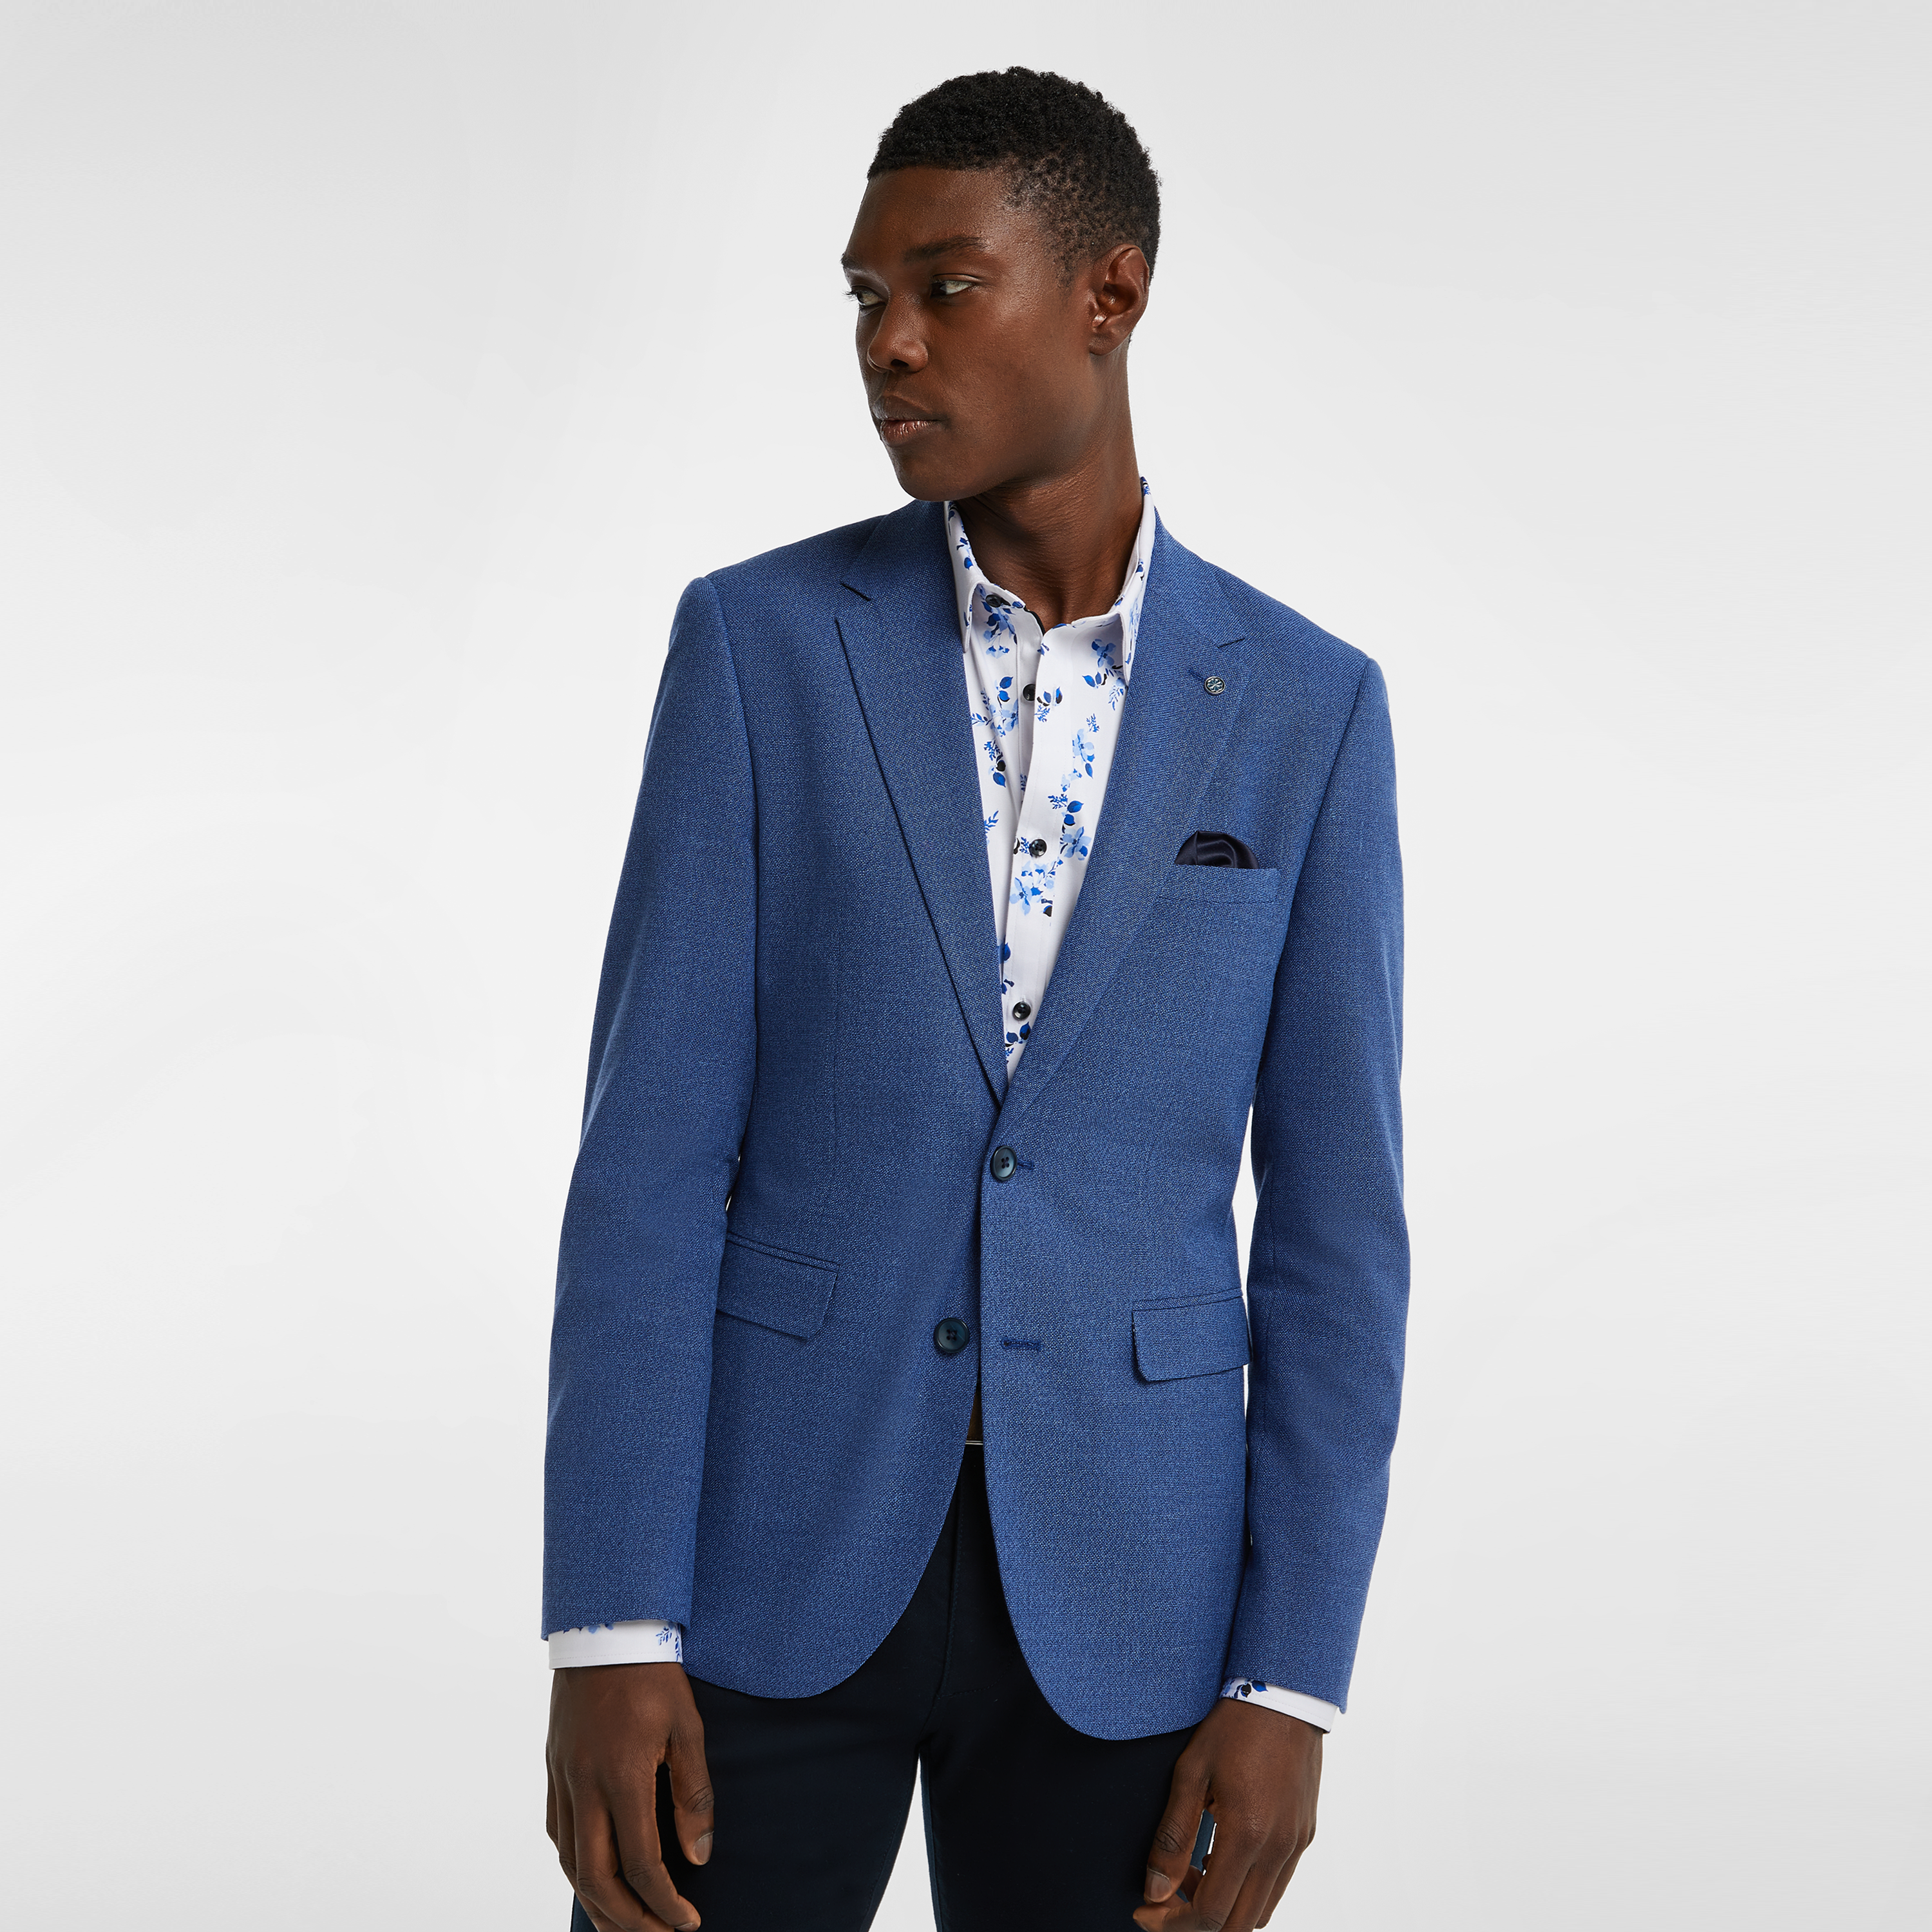 Men's Blazer Jackets | The Bonobos Suit Store | Bonobos